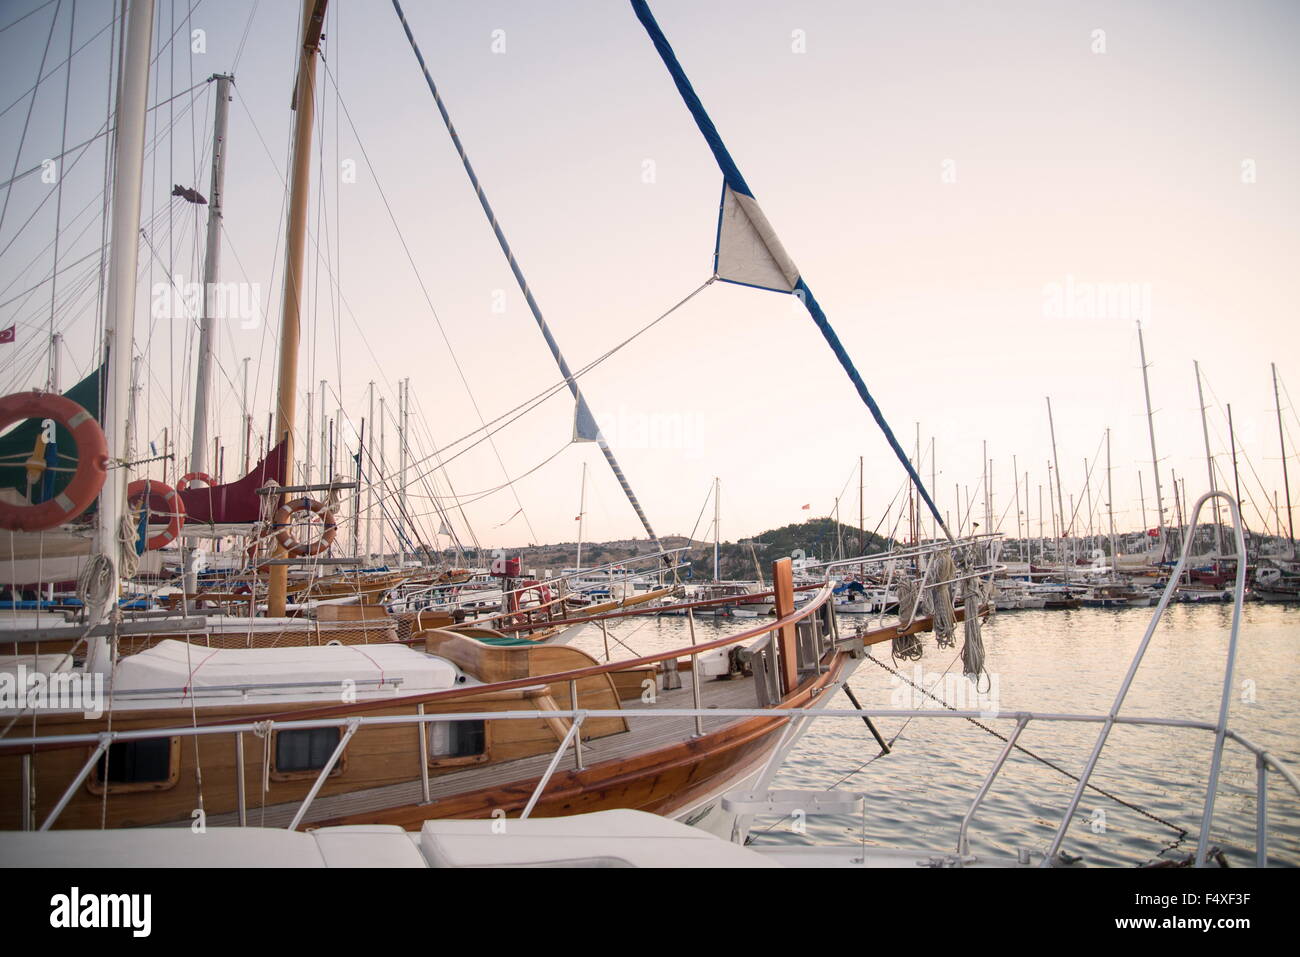 Marina with docked yachts at sunset in Turkey Stock Photo